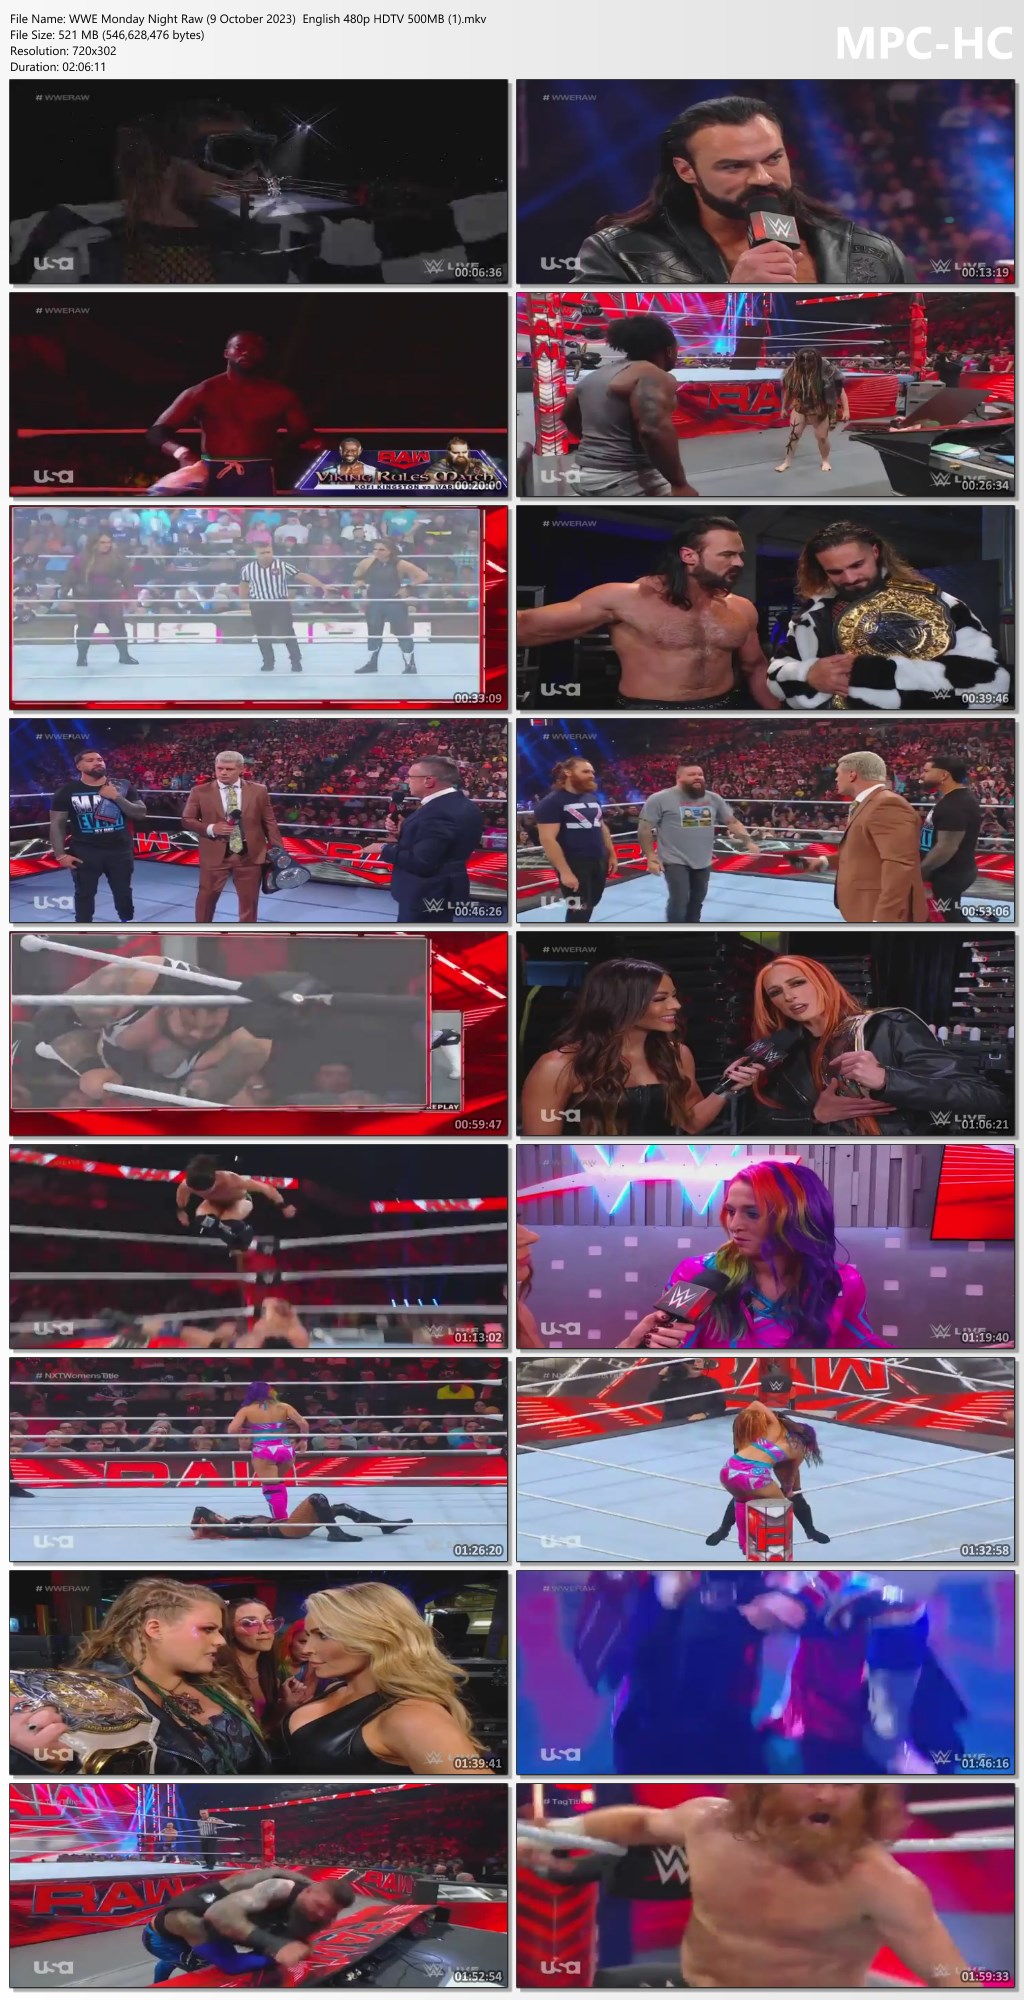 WWE-Monday-Night-Raw-9-October-2023-English-480p-HDTV-500-MB-1-mkv-thumbs